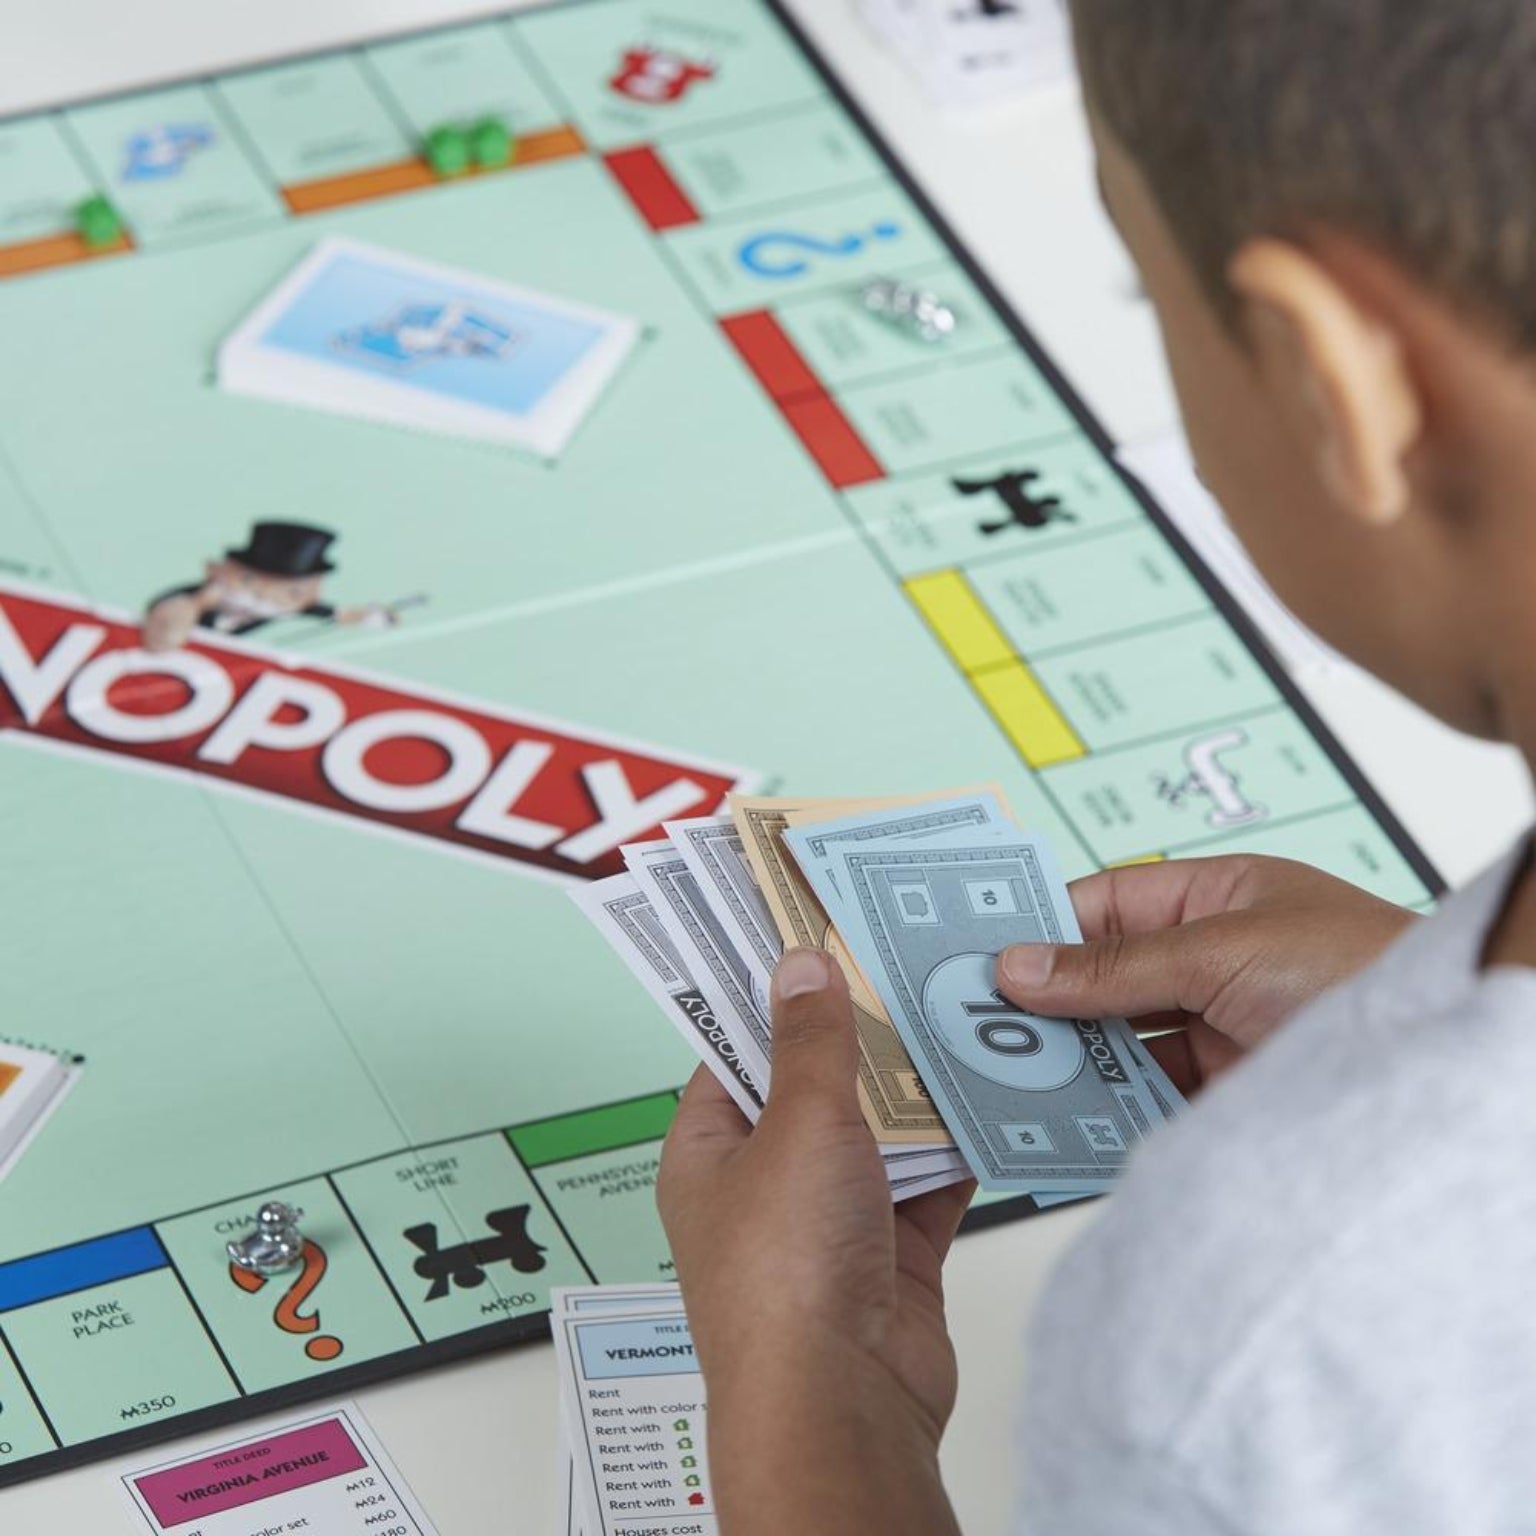 Jogo de tabuleiro Monopoly clássico